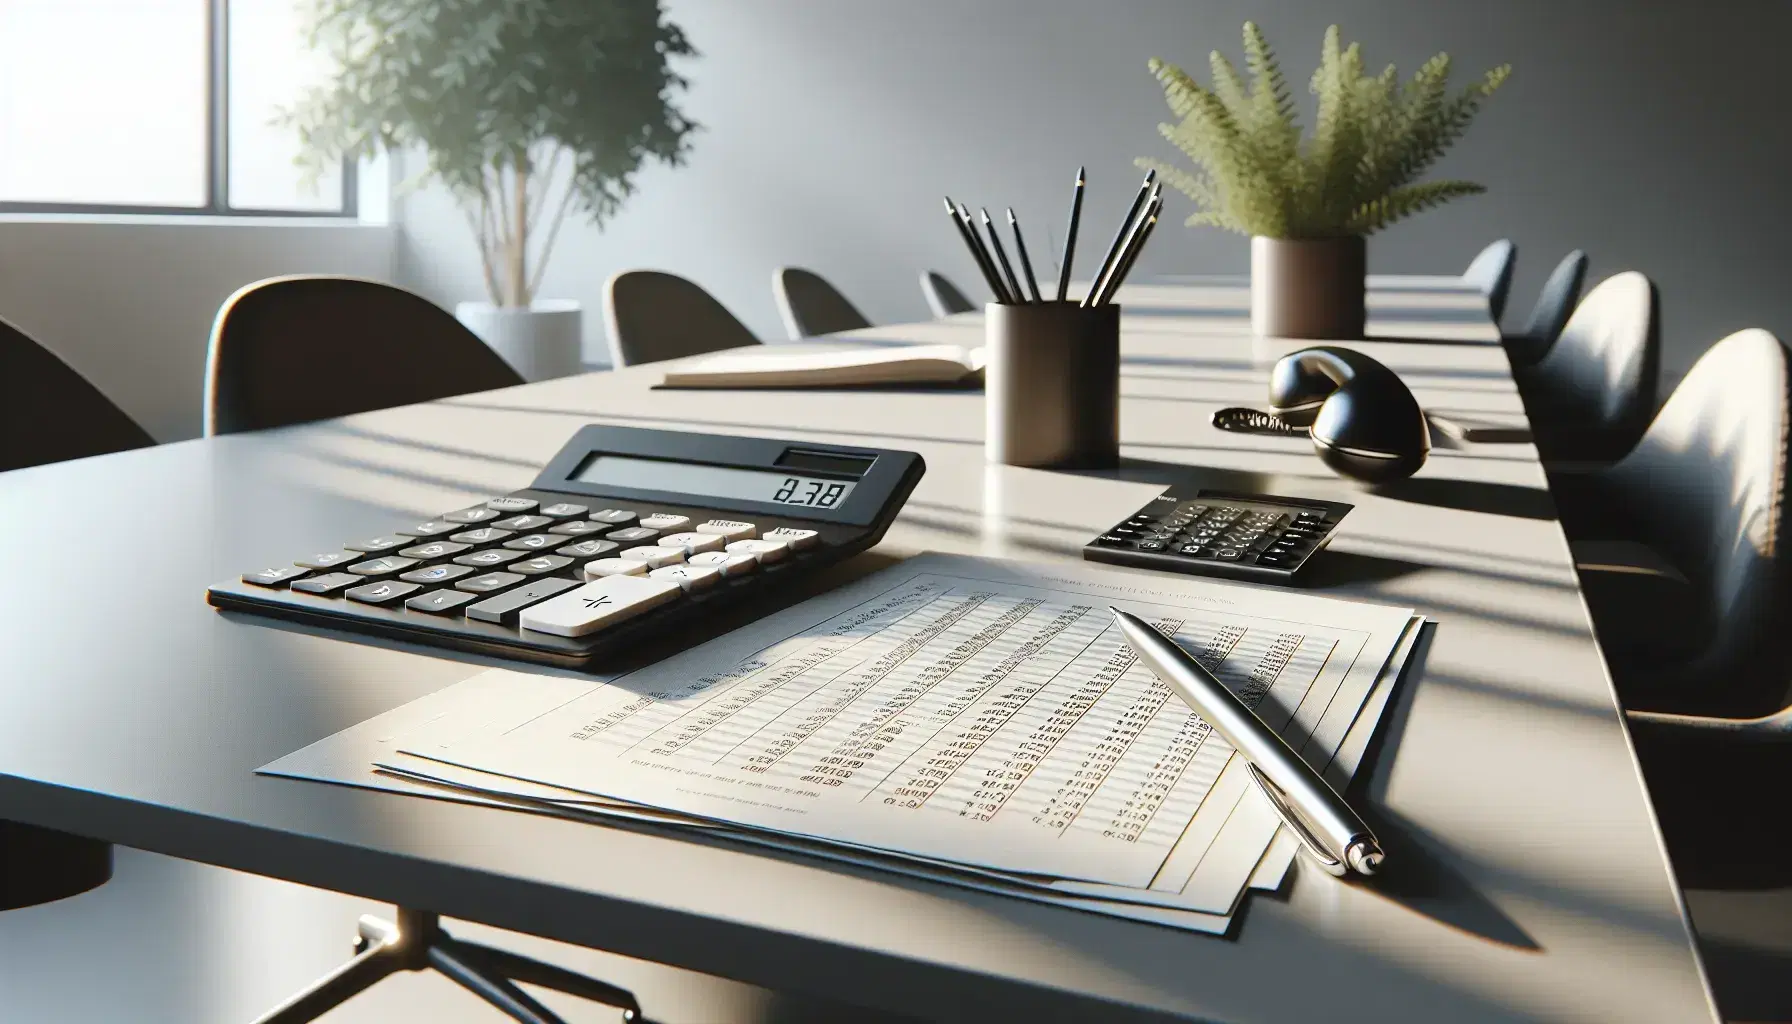 Oficina moderna con escritorio claro, calculadora negra, papeles con números, lápiz mecánico y teléfono de diseño, planta de interior al fondo.